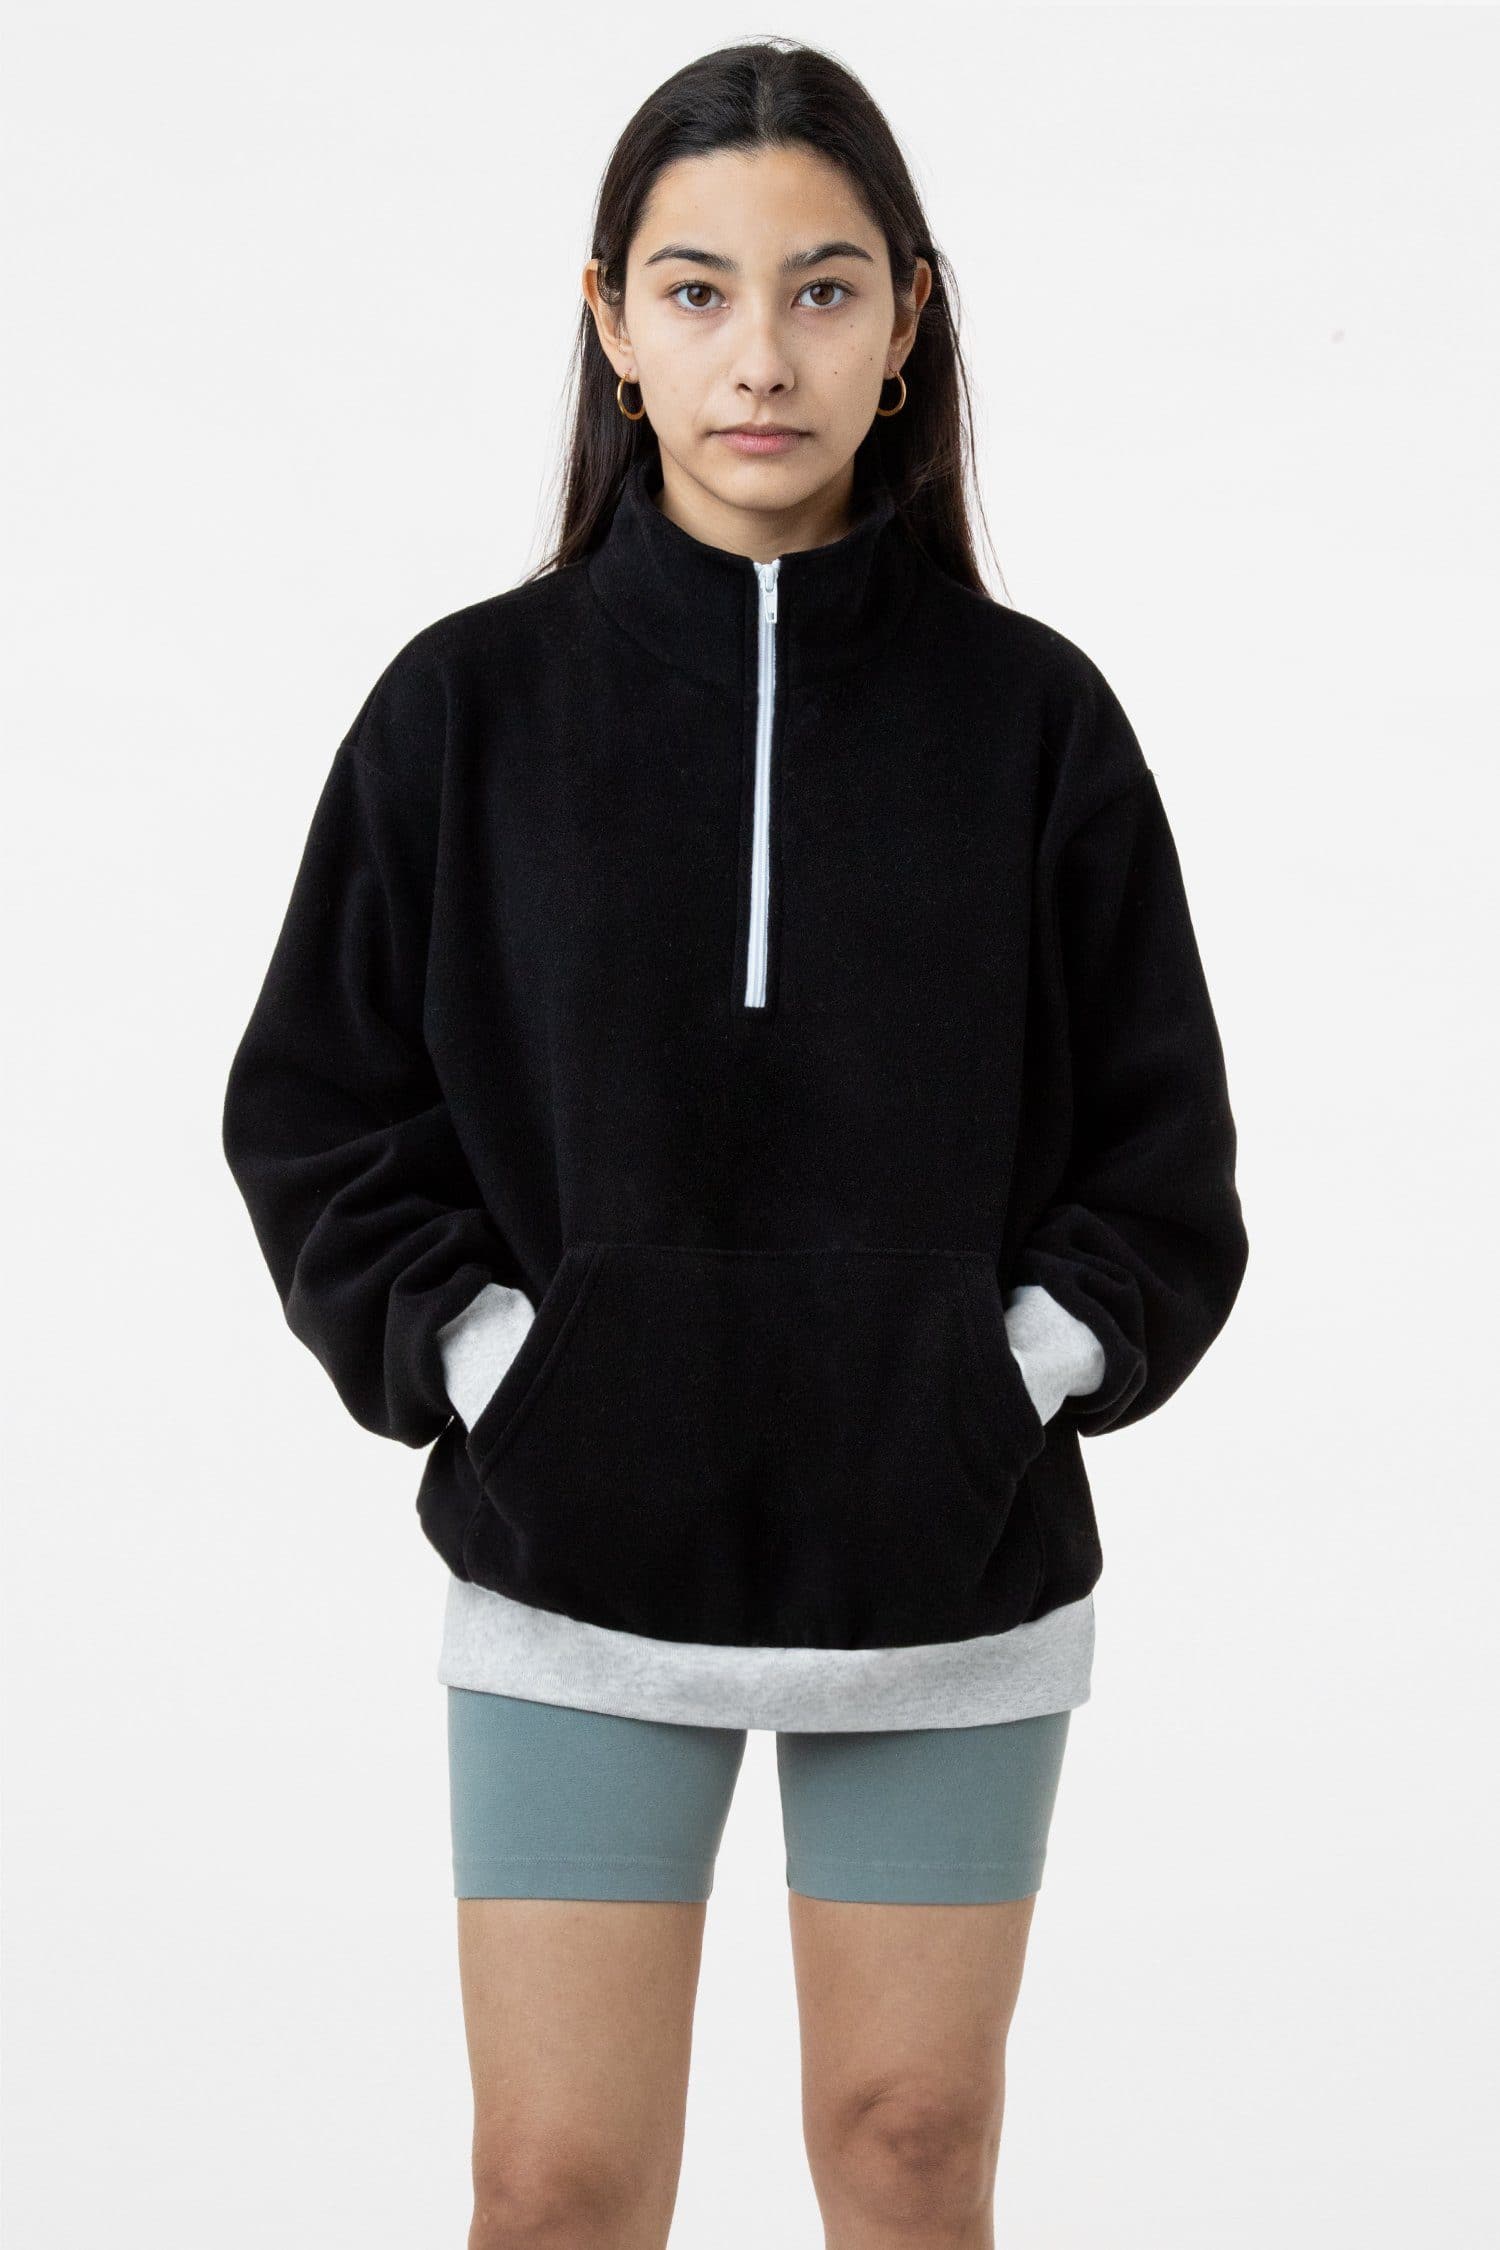 dkny sport Sweatshirts & Hoodies for Women - Poshmark